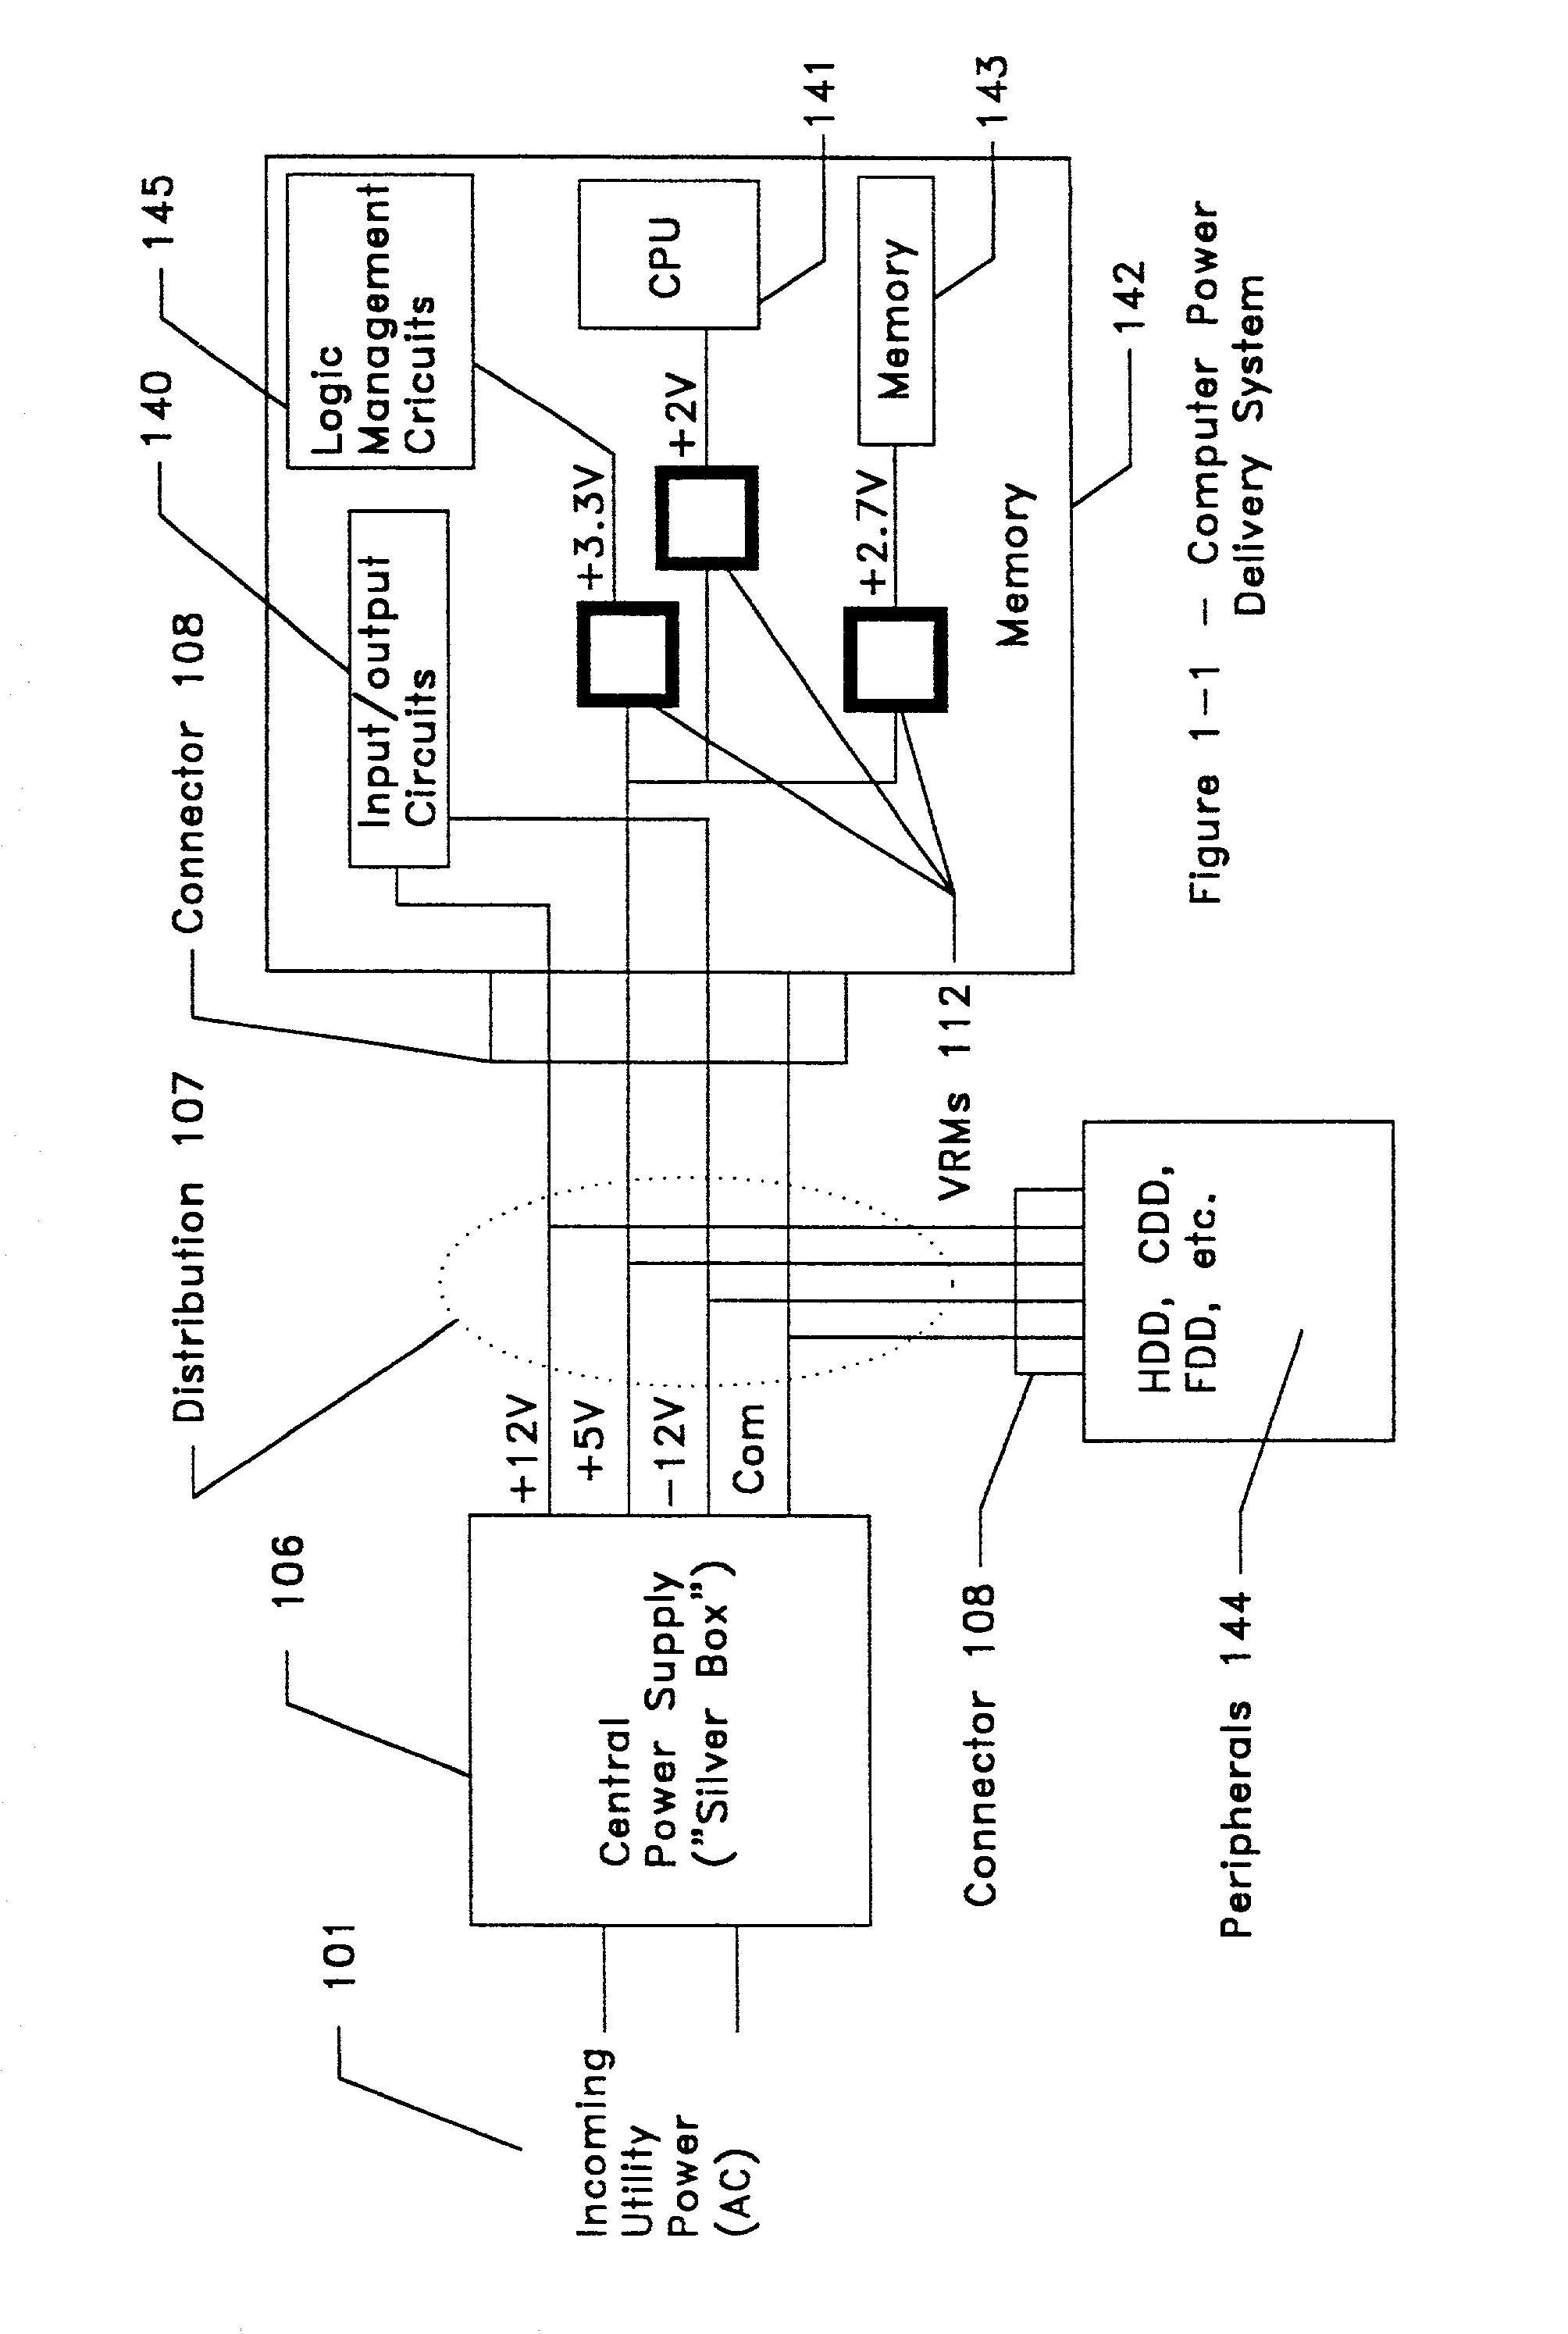 Multiple element rectification circuit